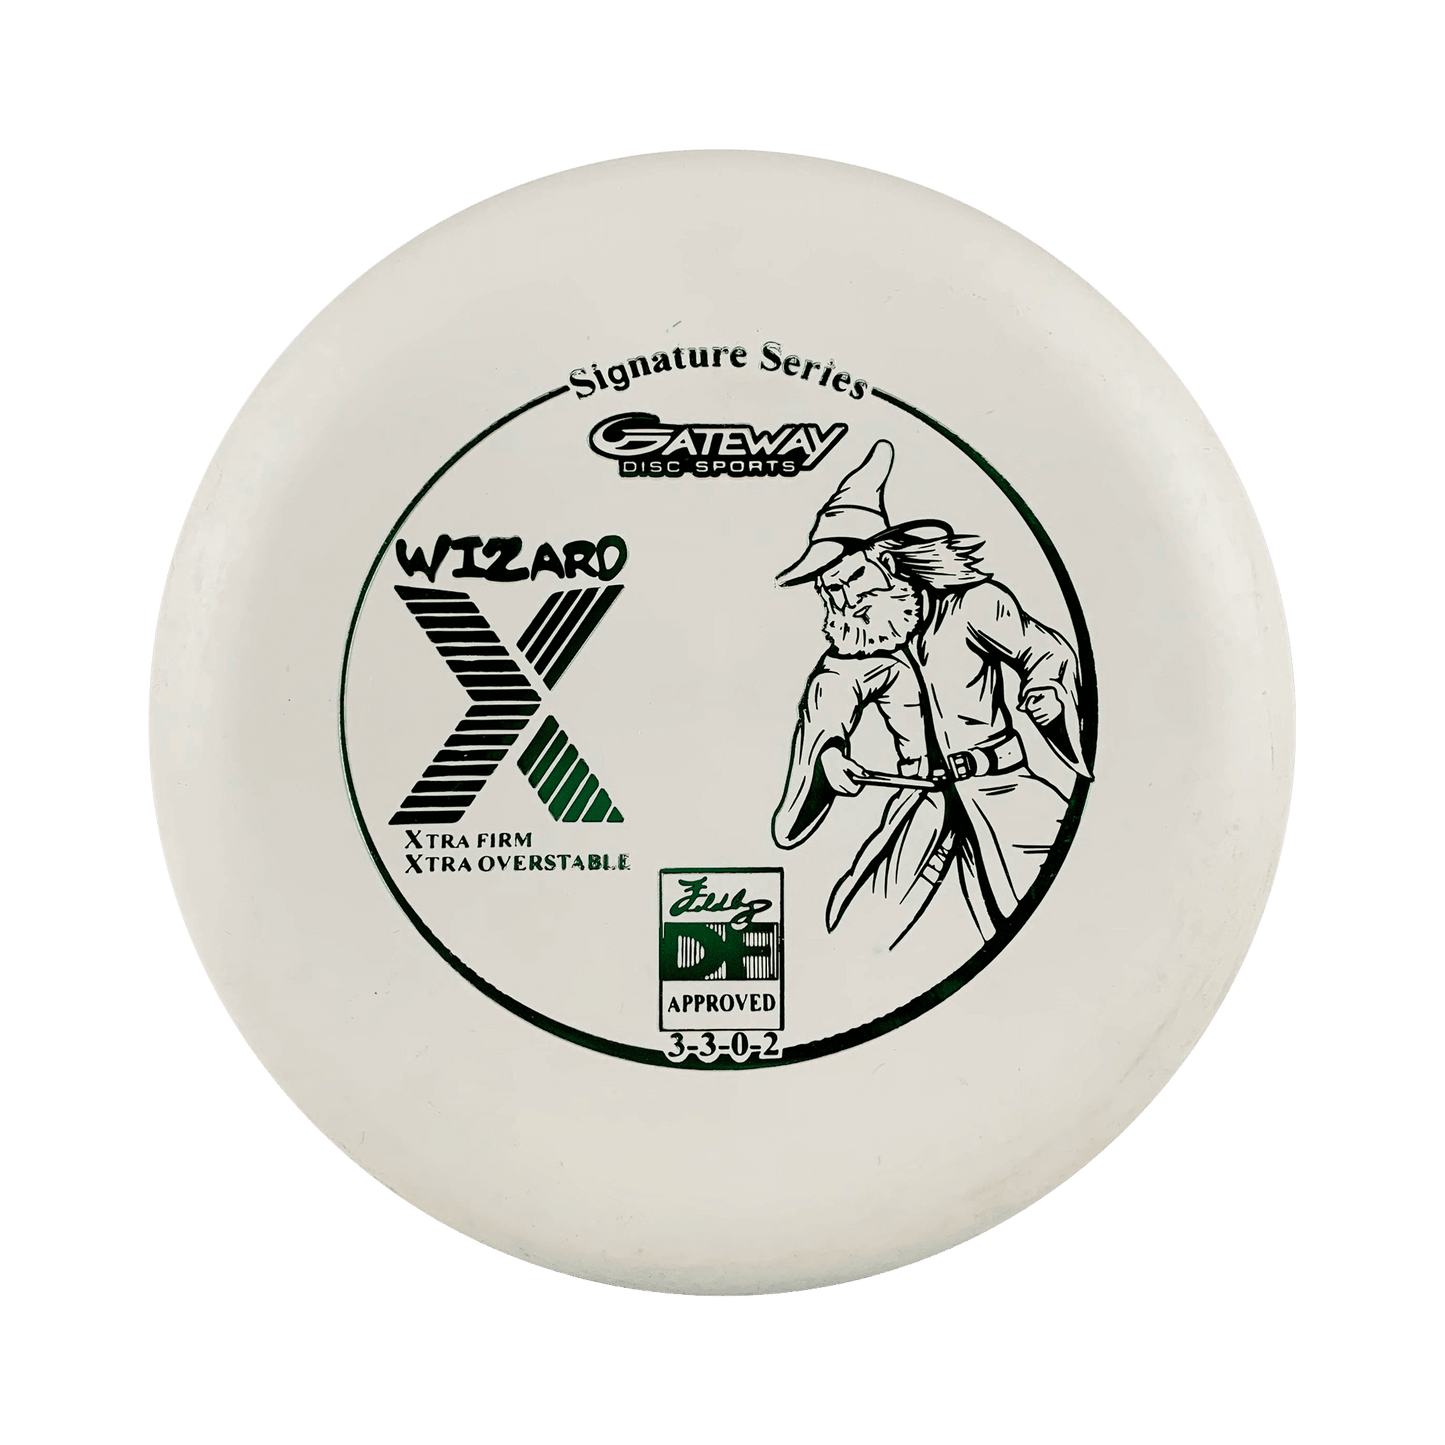 Xtra Firm Wizard - Dave Feldberg Signature Series Disc Gateway white 173 